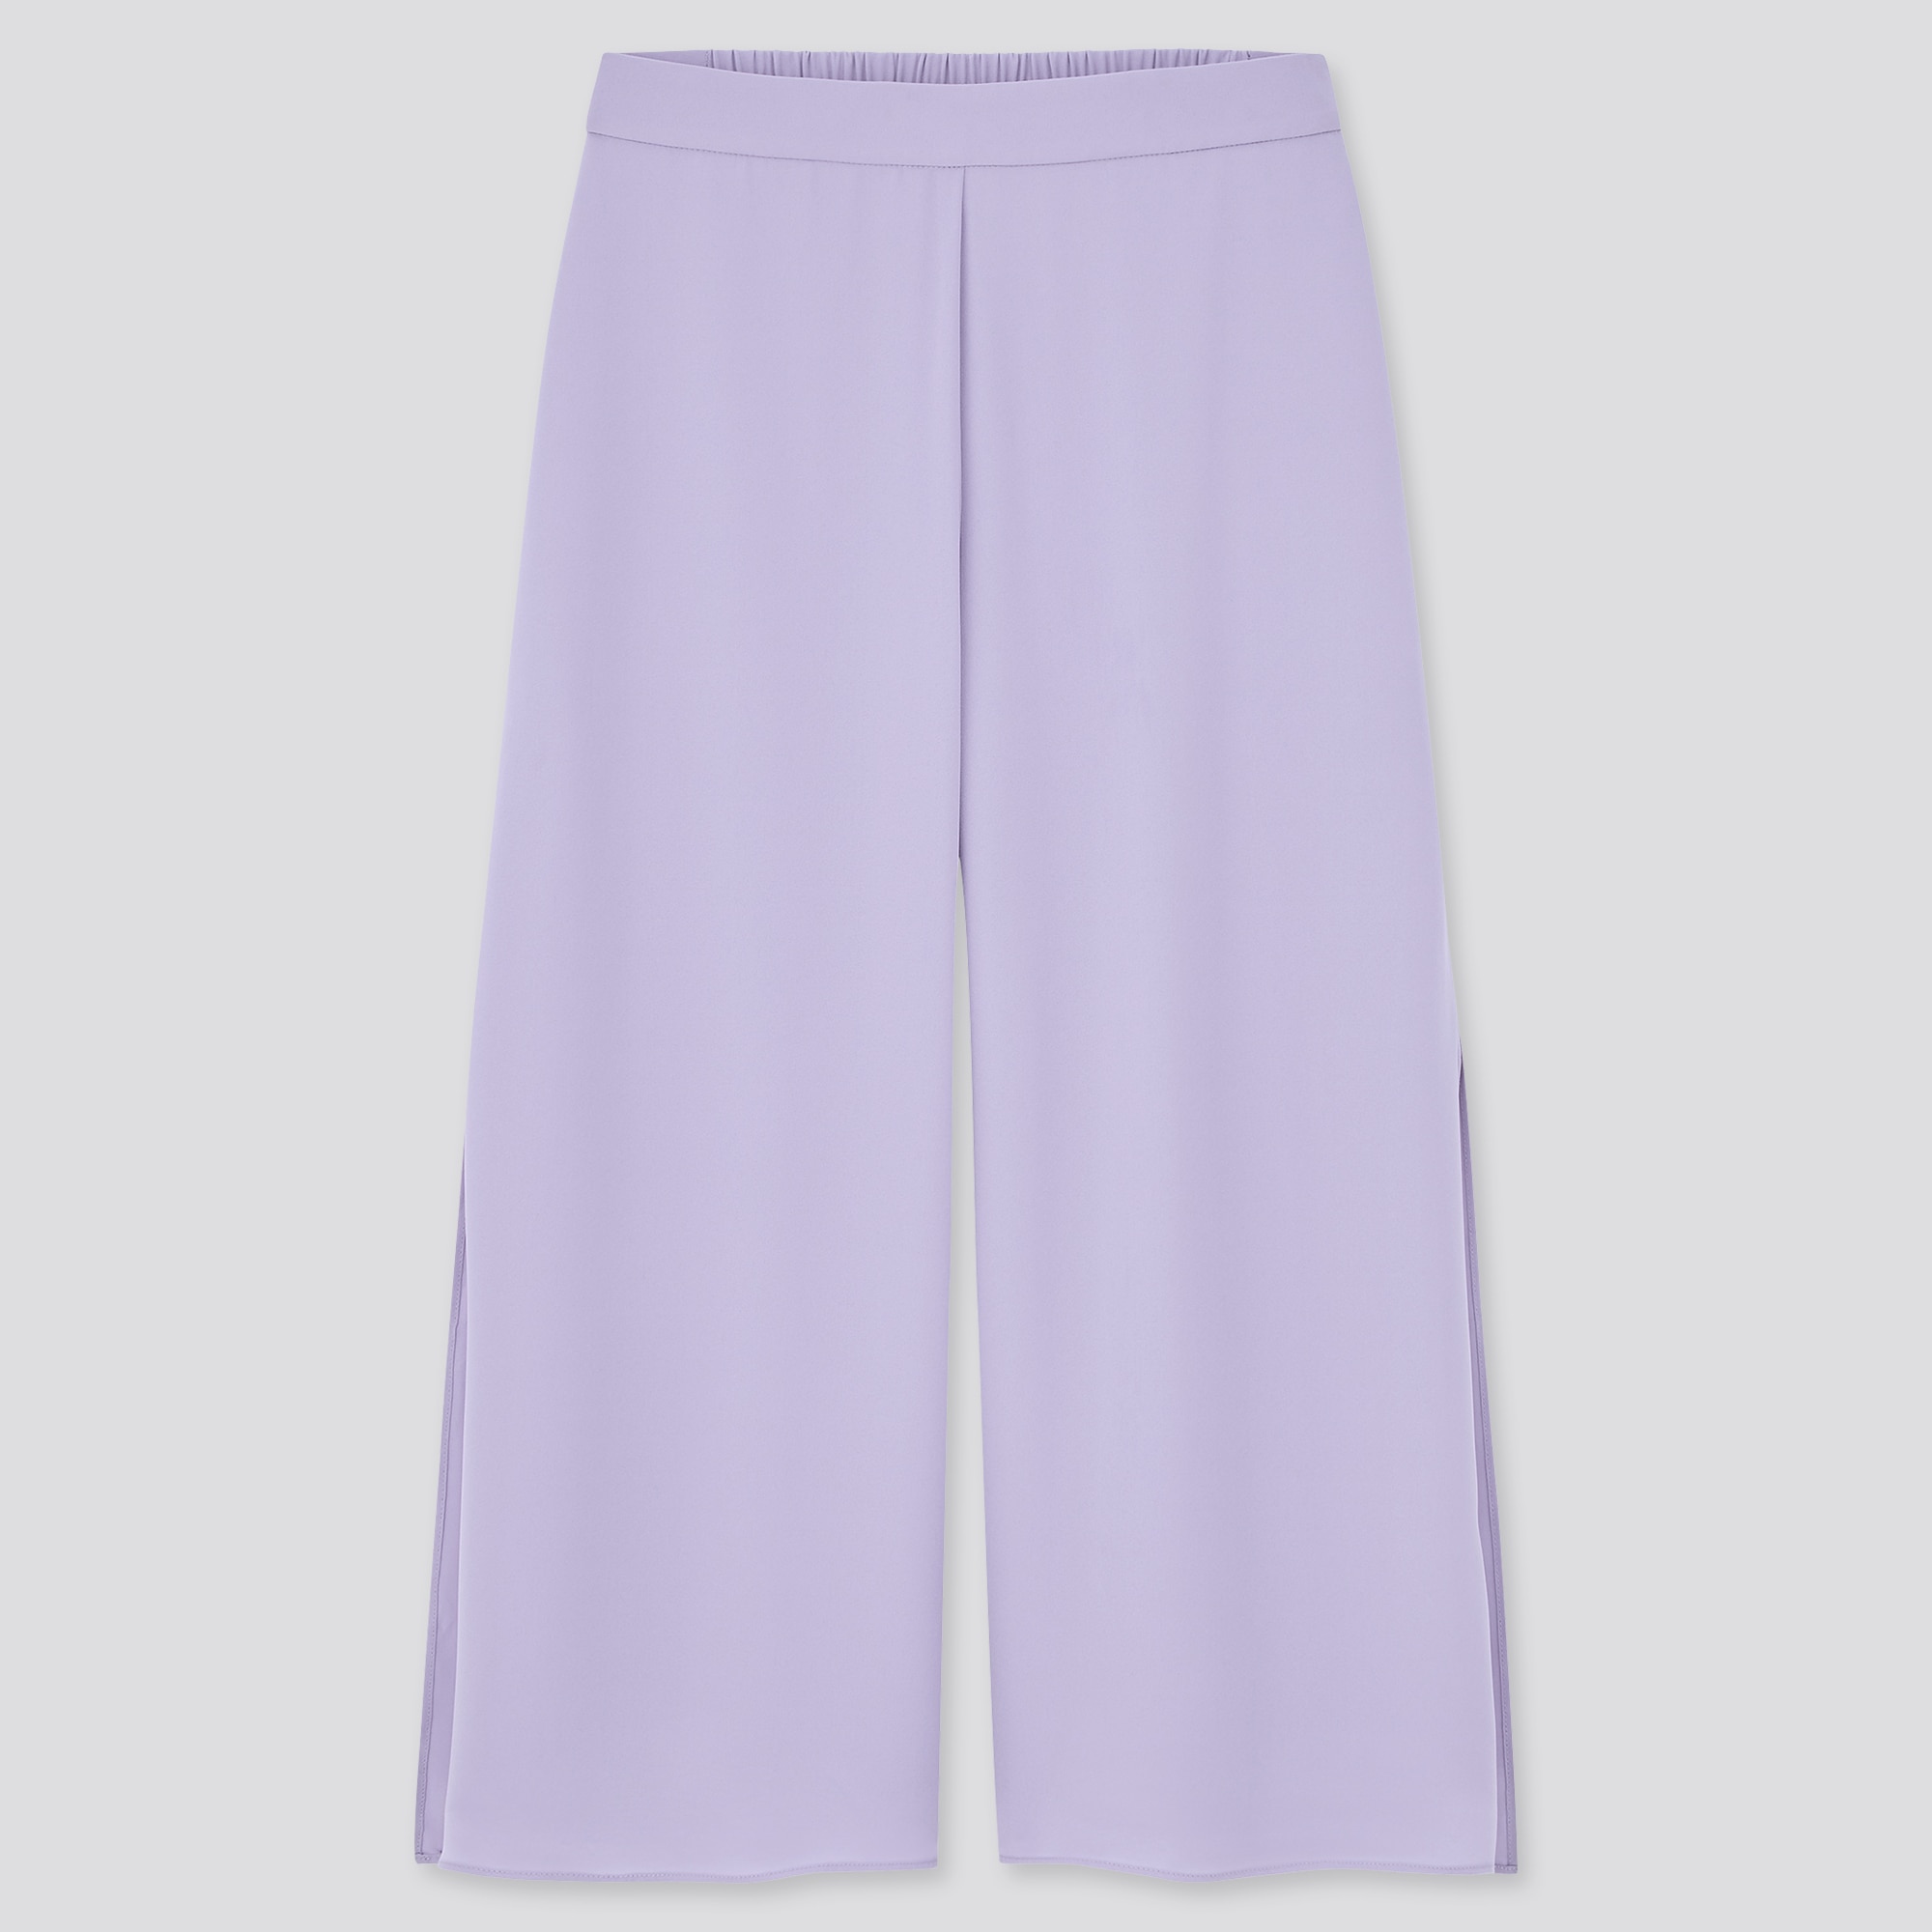 Women's Elastic Waist Skirt Pants